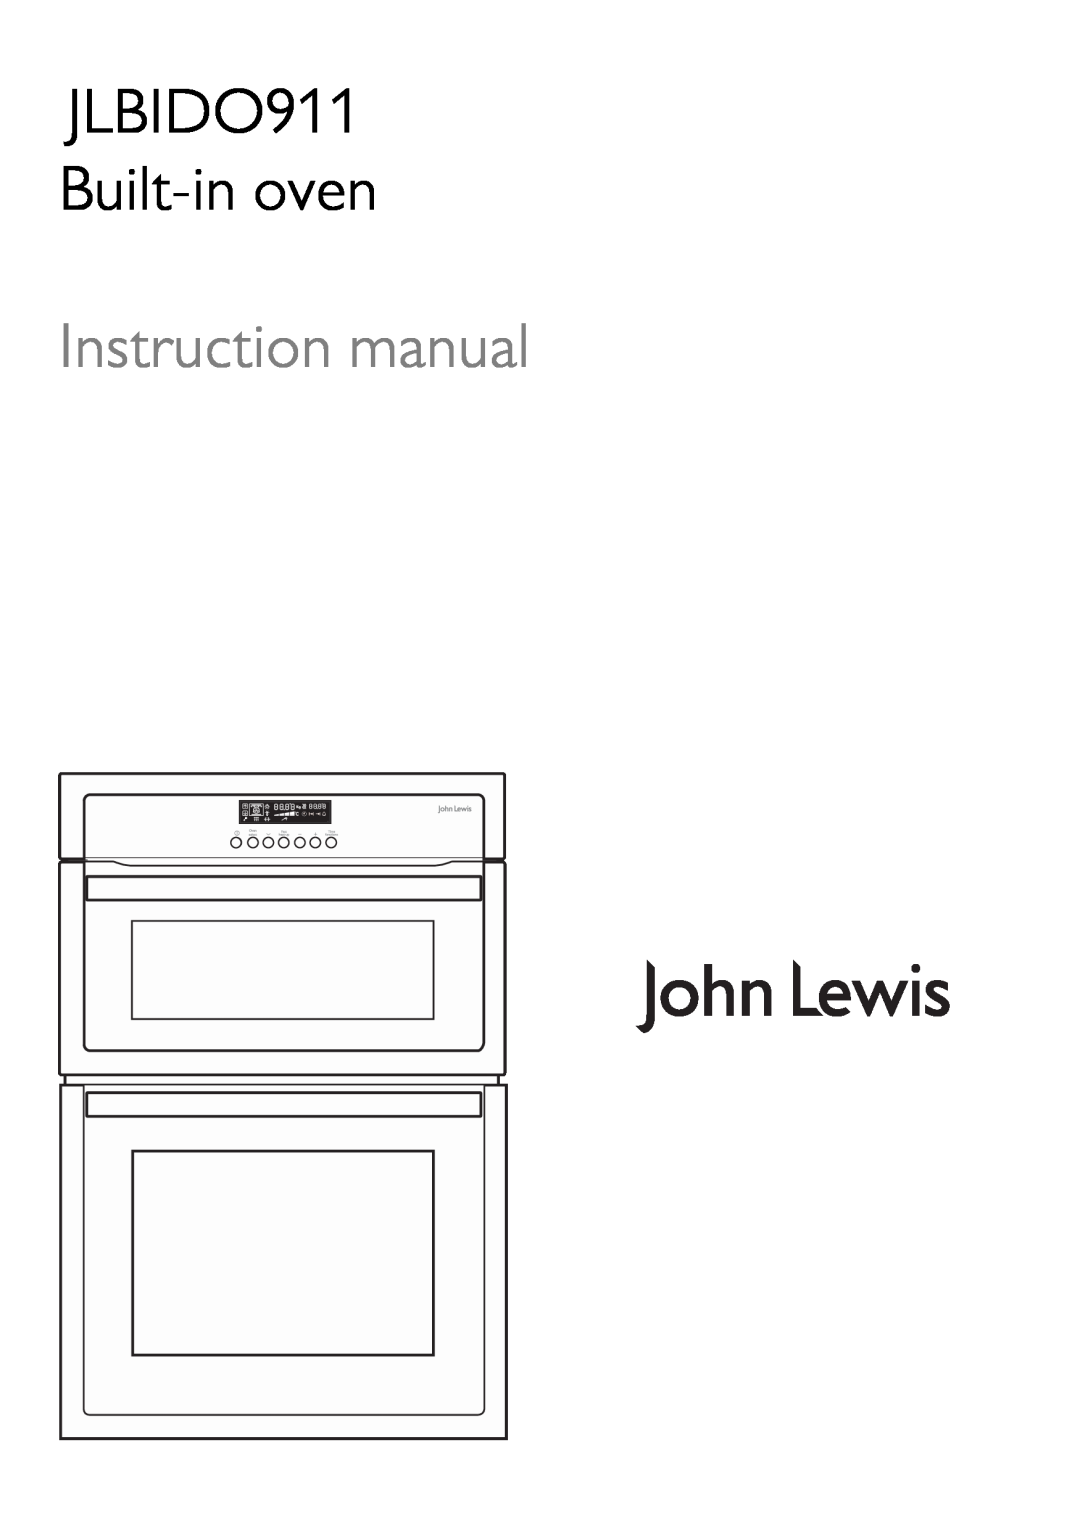 John Lewis instruction manual JLBIDO911 Built-in oven 